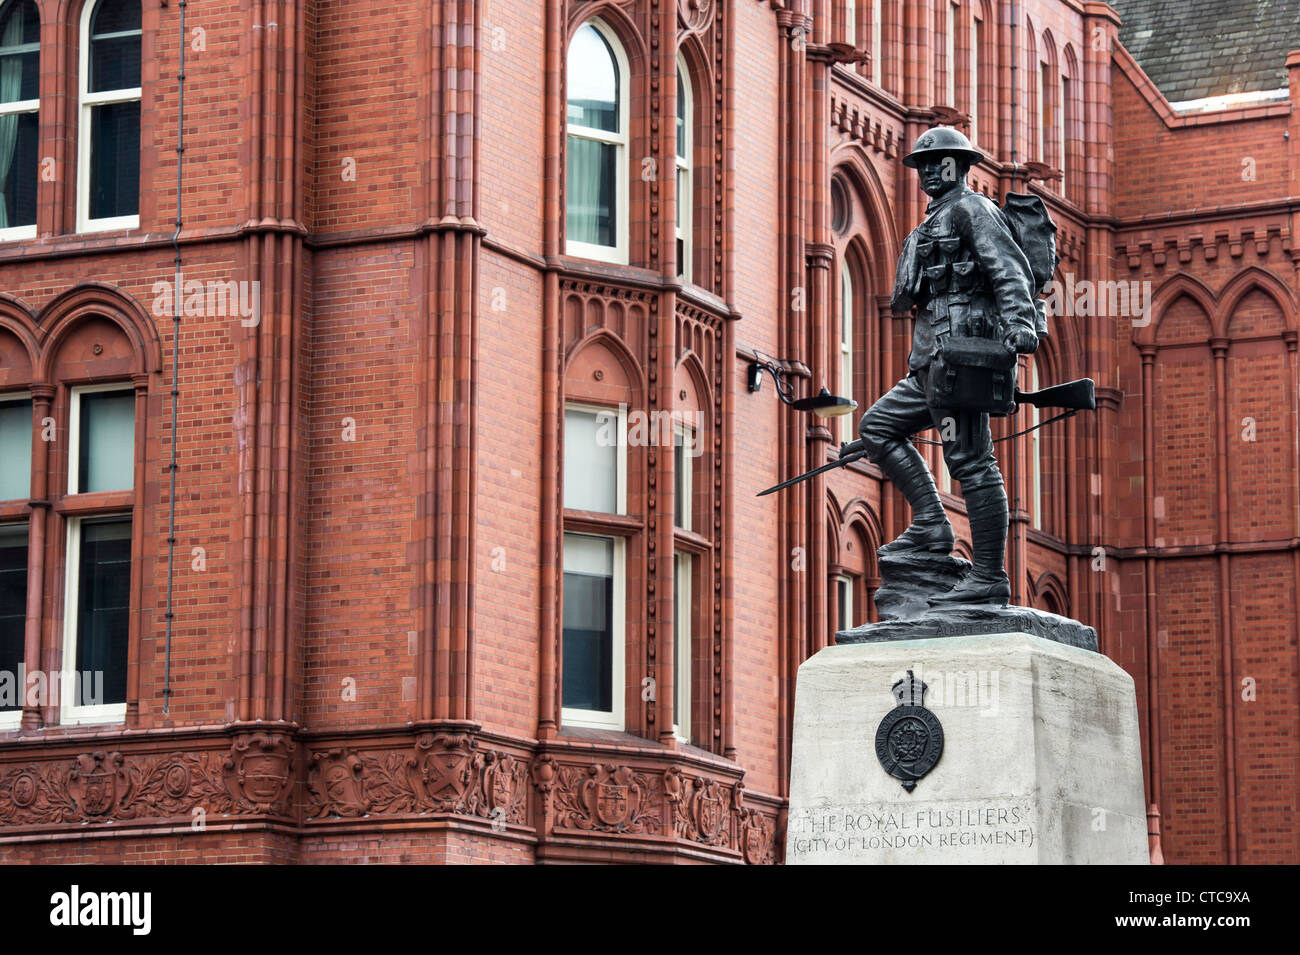 Royal Fusiliers Memorial. High Holburn. London, England Stock Photo